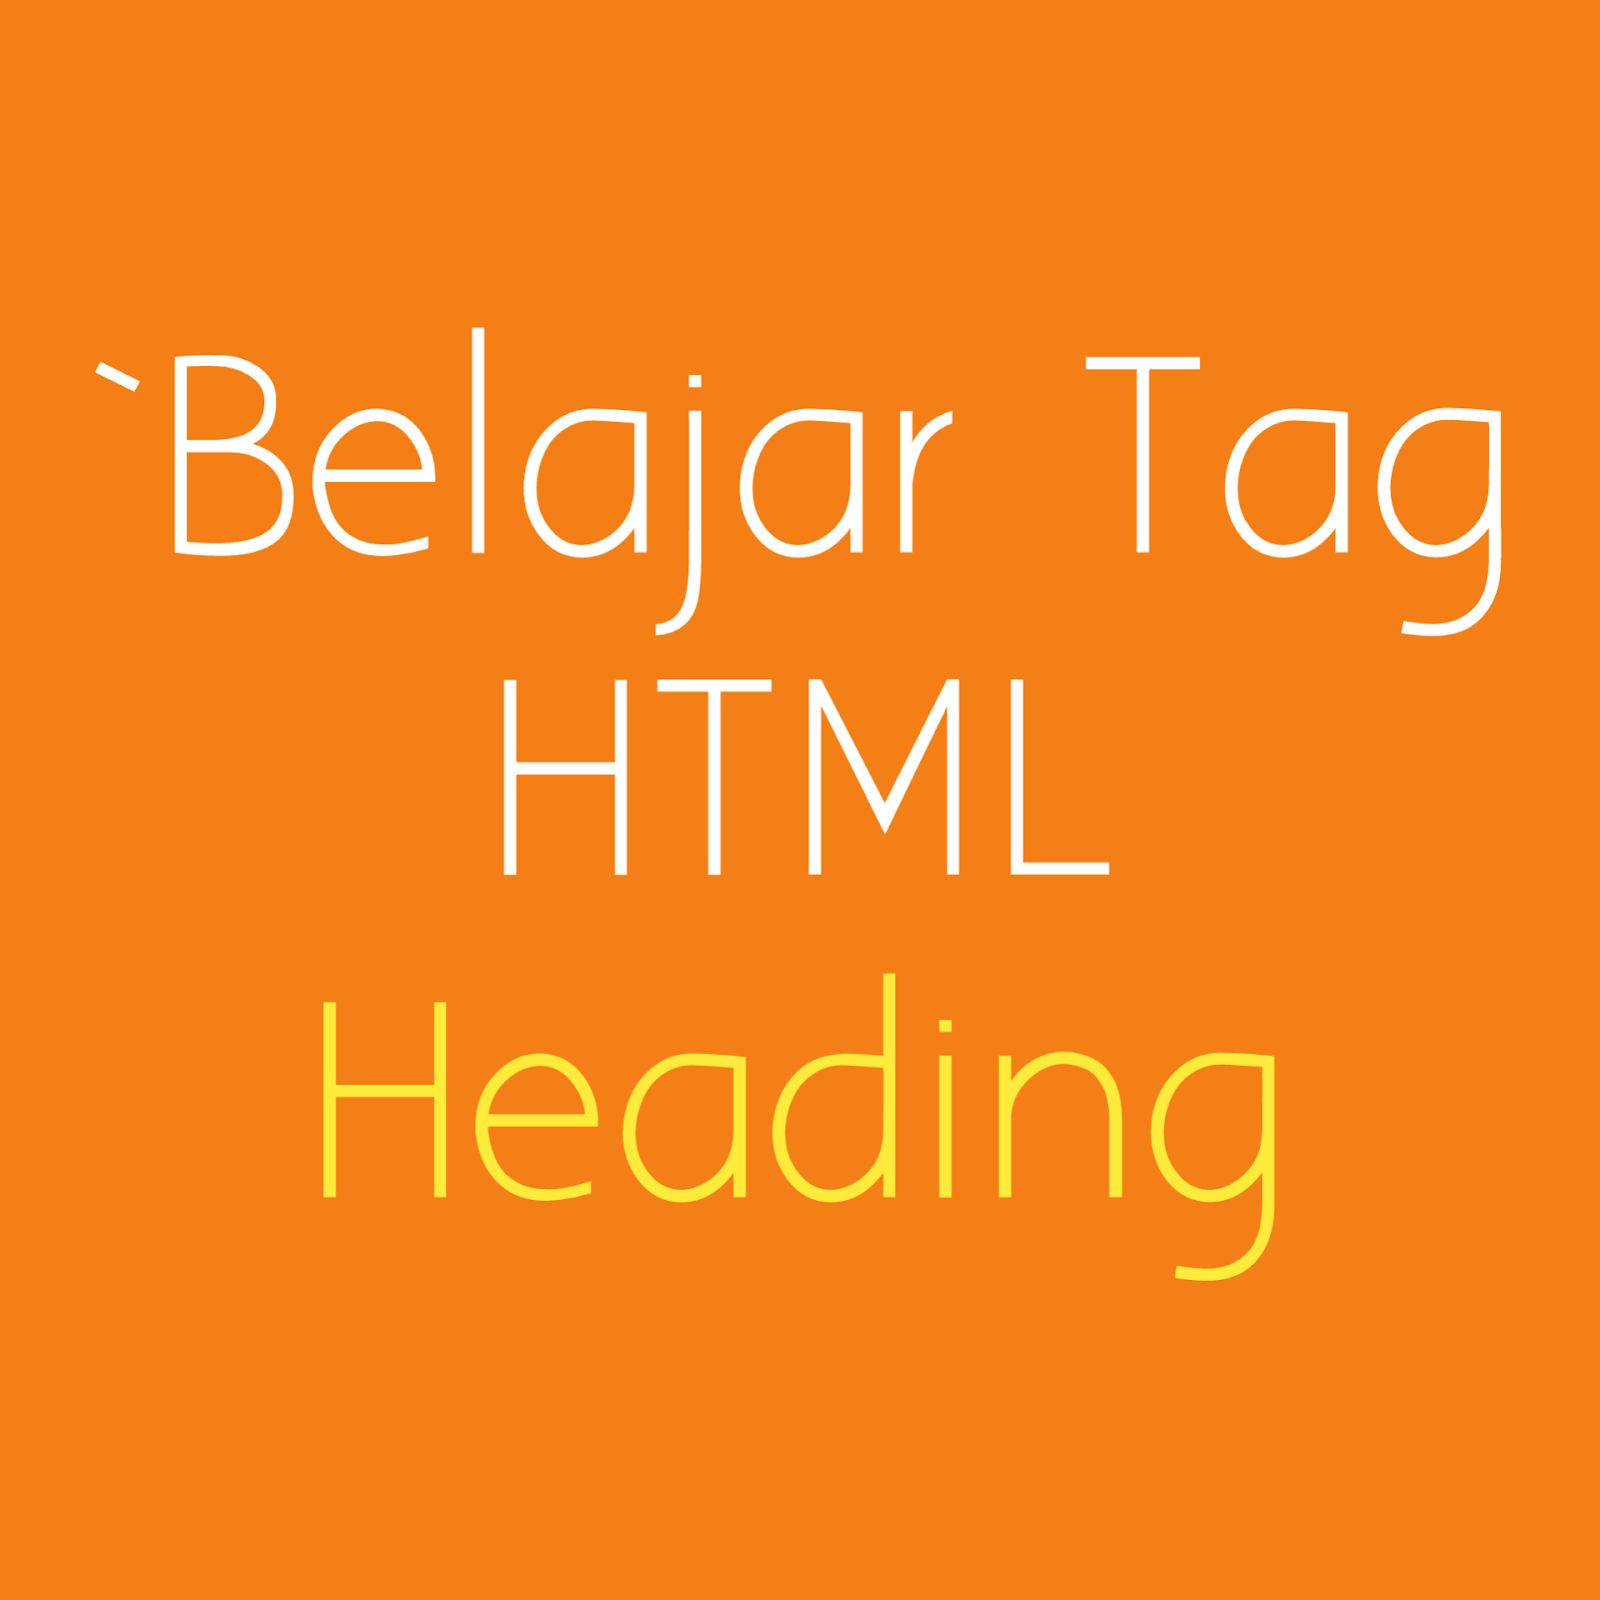 Belajar Tag HTML Heading